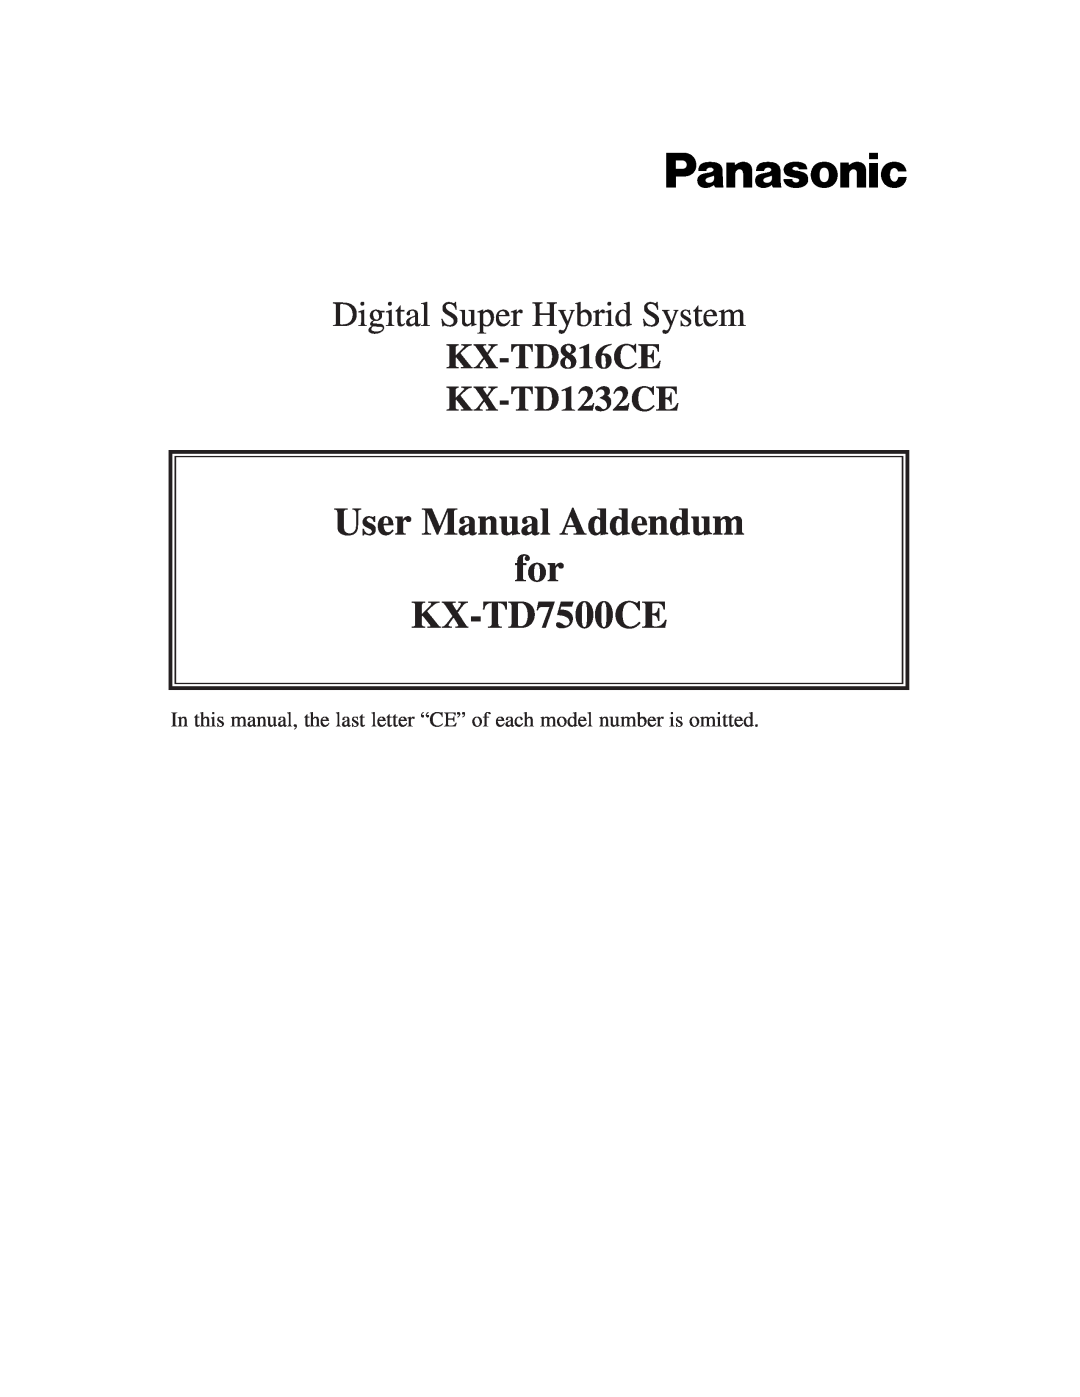 Panasonic user manual KX-TD816CE KX-TD1232CE, User Manual Addendum for KX-TD7500CE, Digital Super Hybrid System 